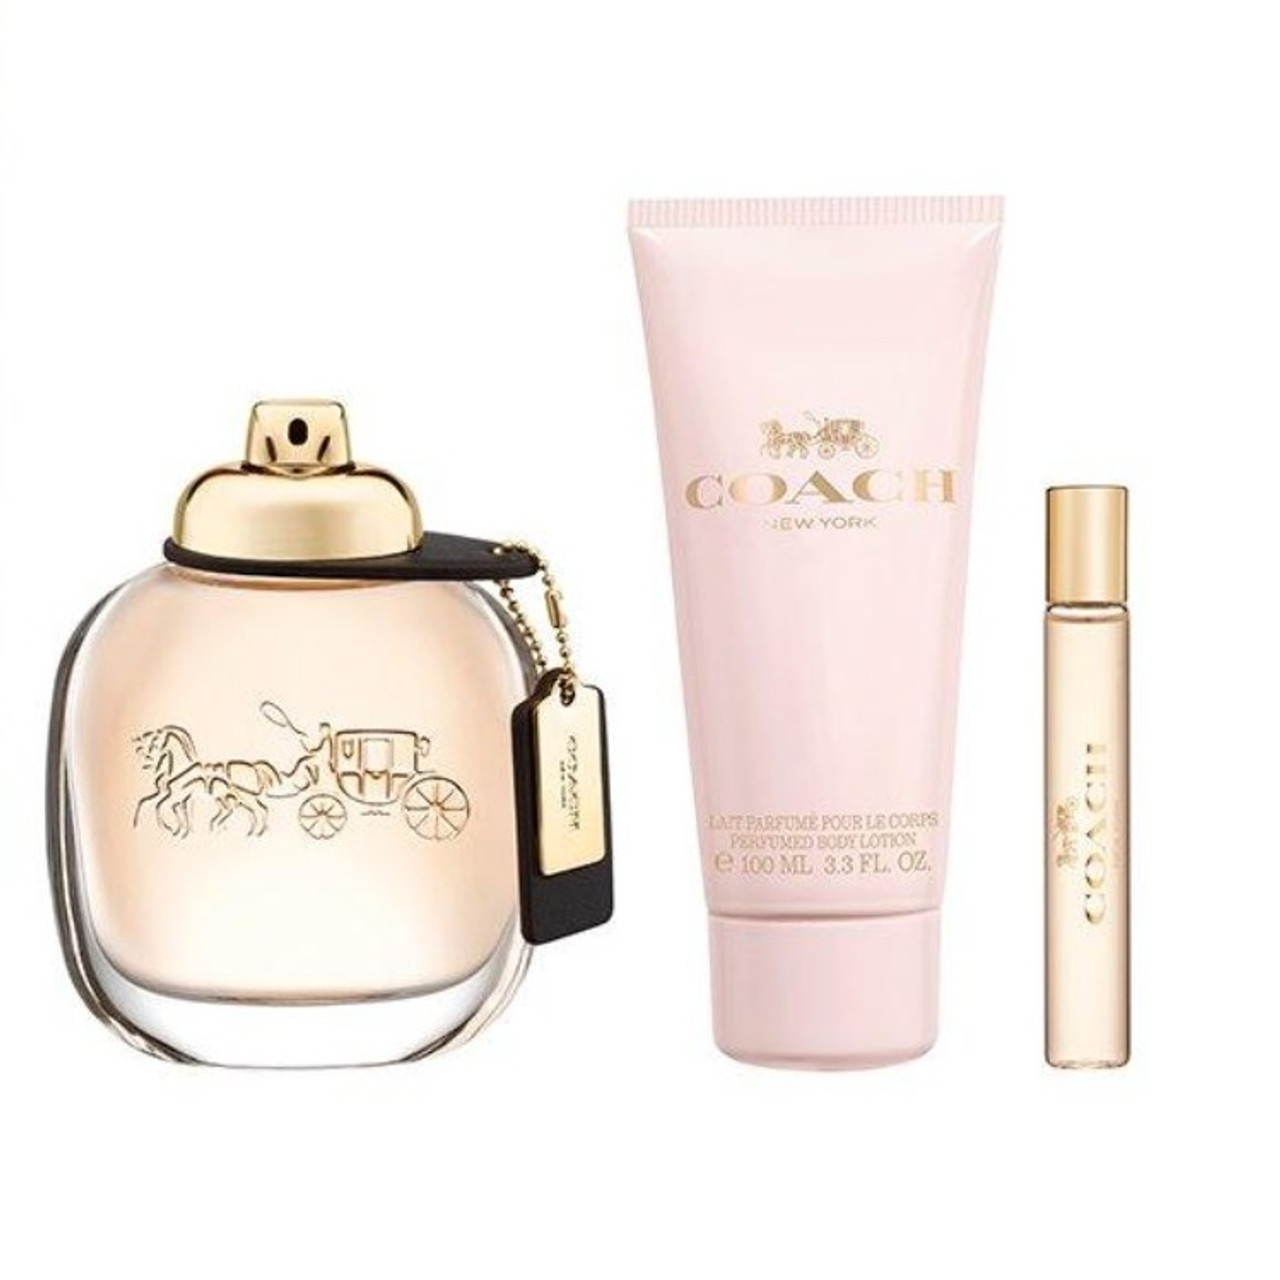 Coach Dreams Perfume Gift Set for Women, 3 Pieces